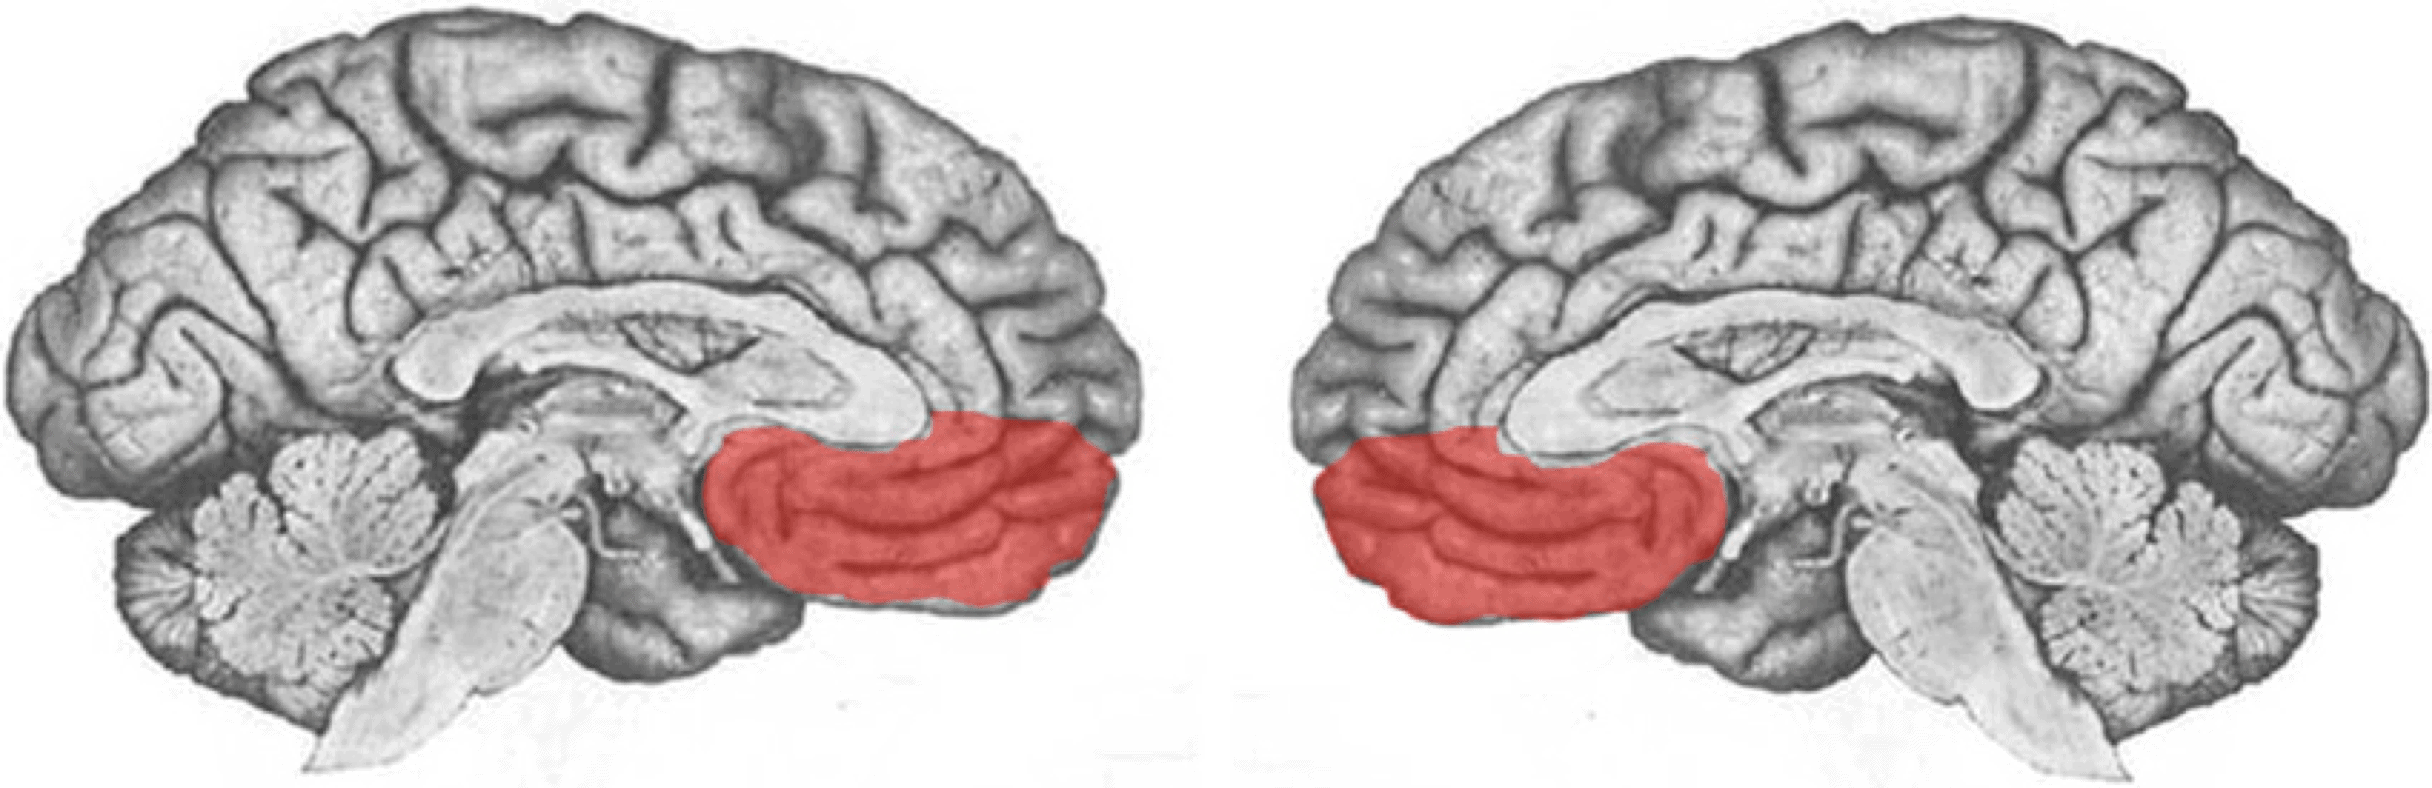 Ventromedial prefrontal cortex